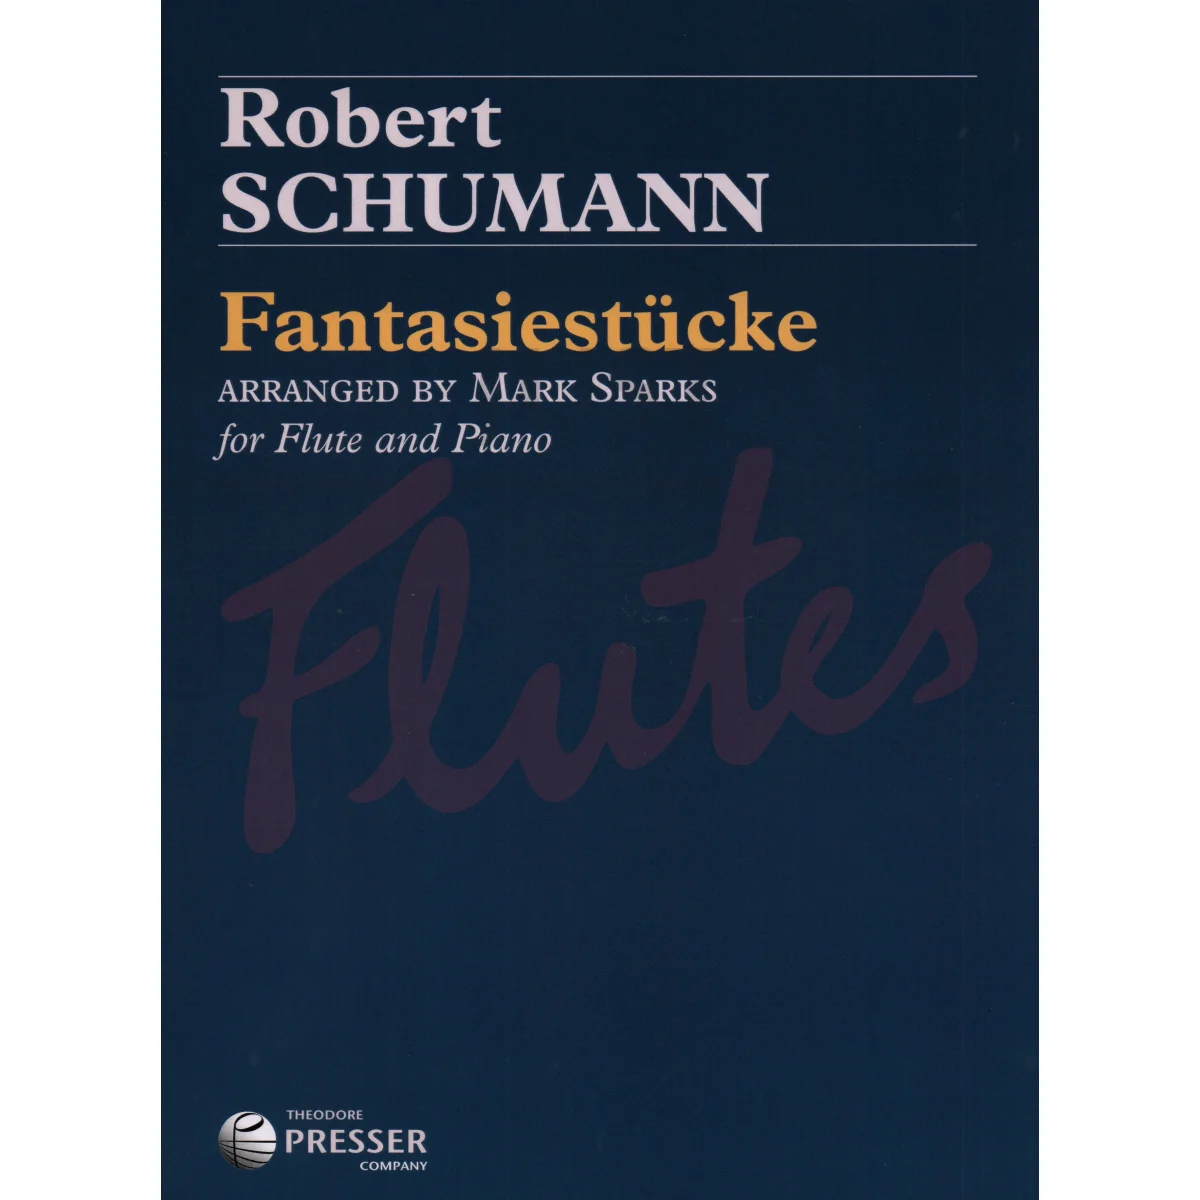 Fantasiestücke for Flute and Piano